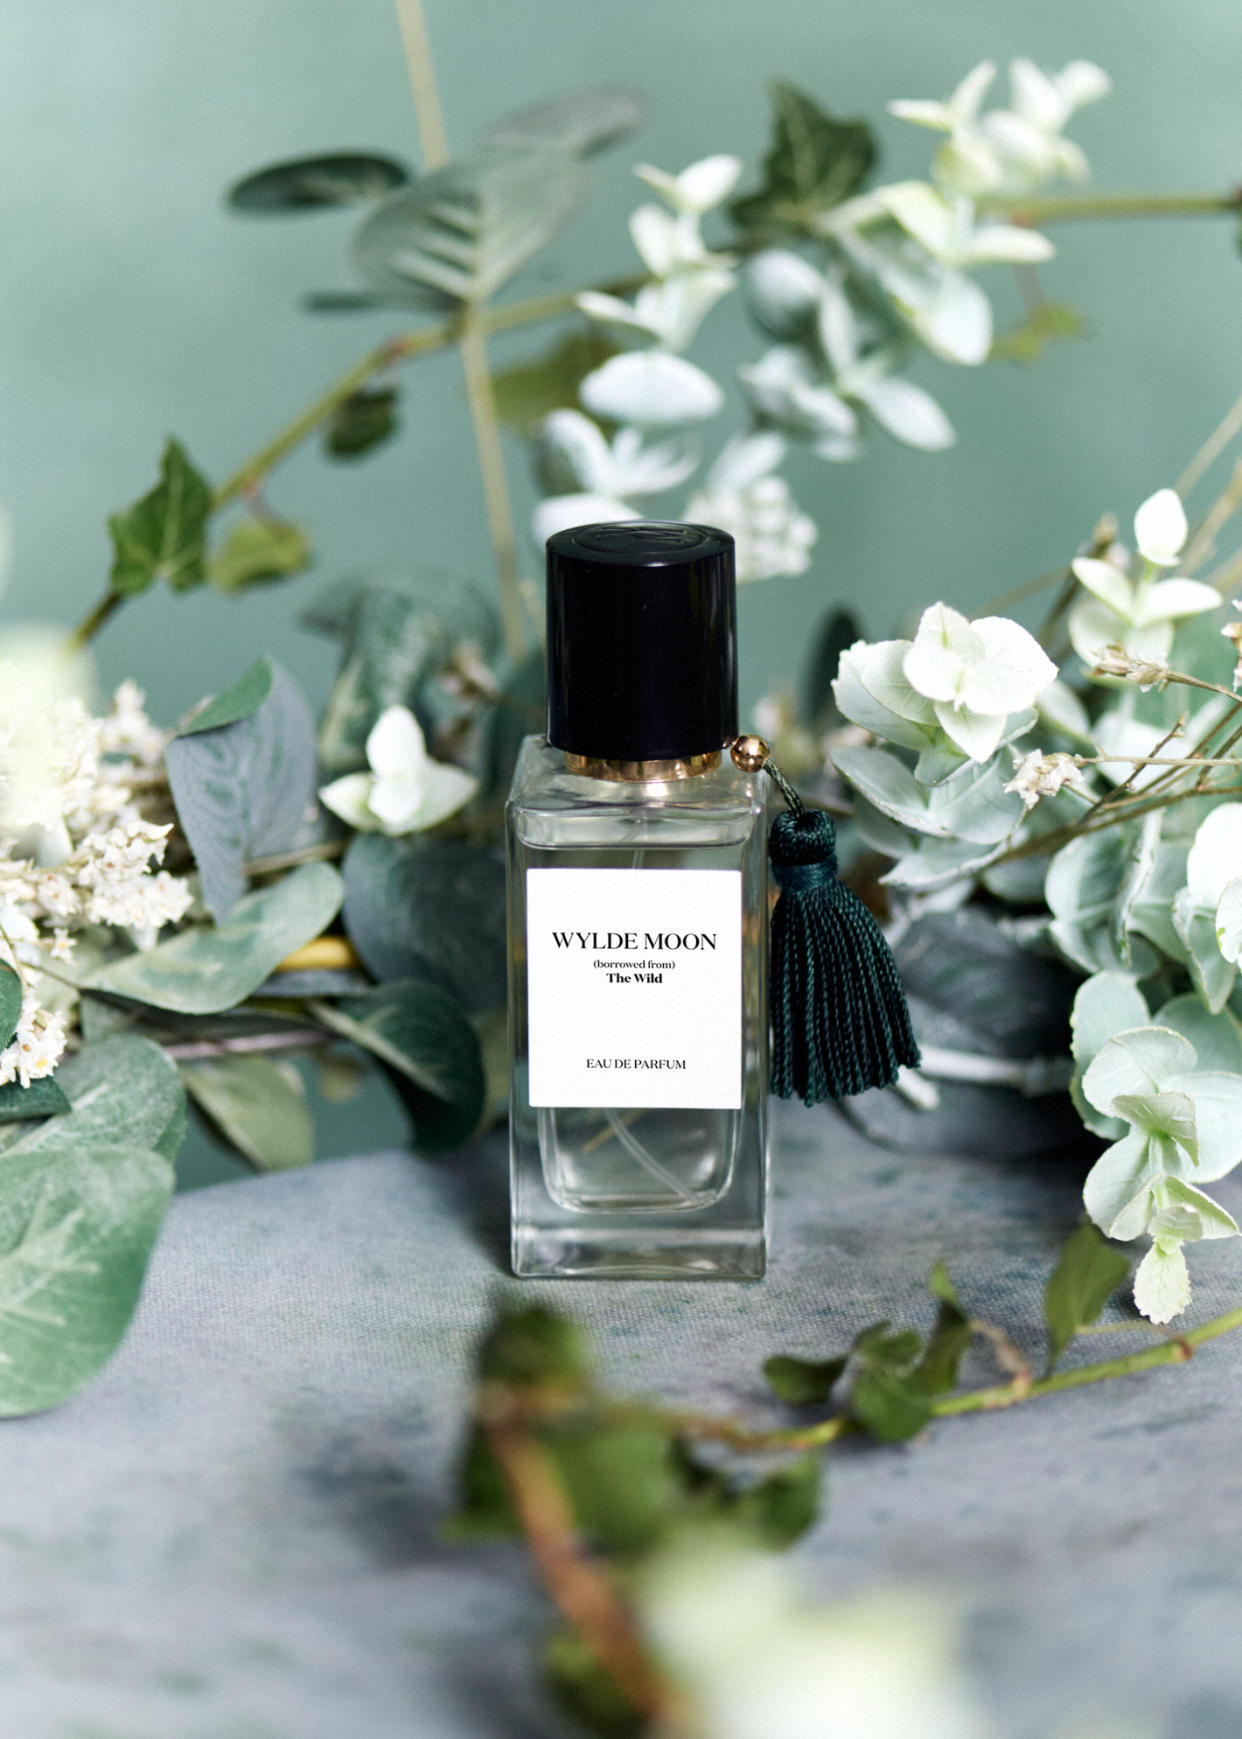 The new perfume launches today. (Jon Gorrigan/Wylde Moon)